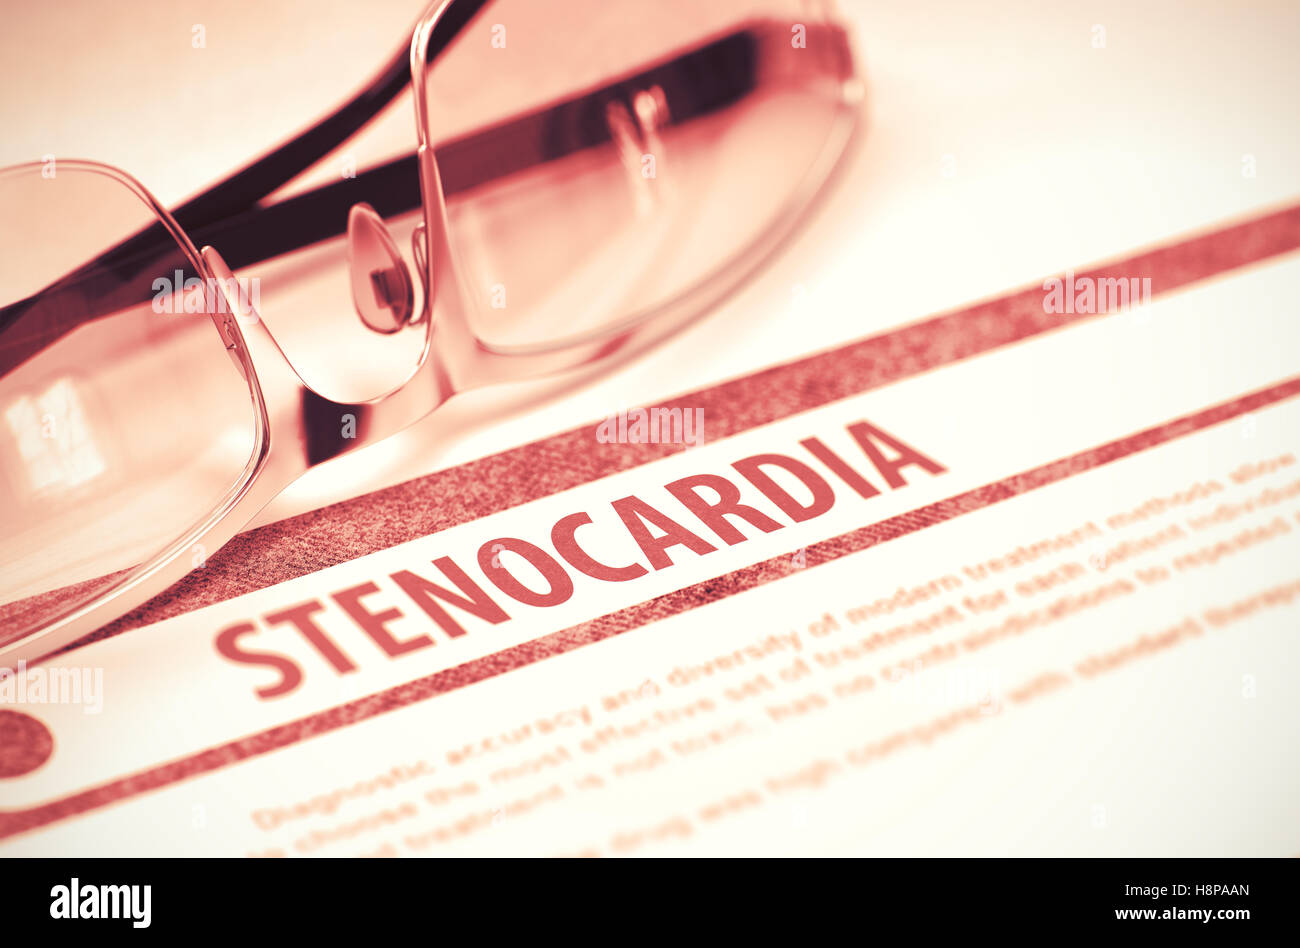 Diagnosis - Stenocardia. Medical Concept. 3D Illustration. Stock Photo